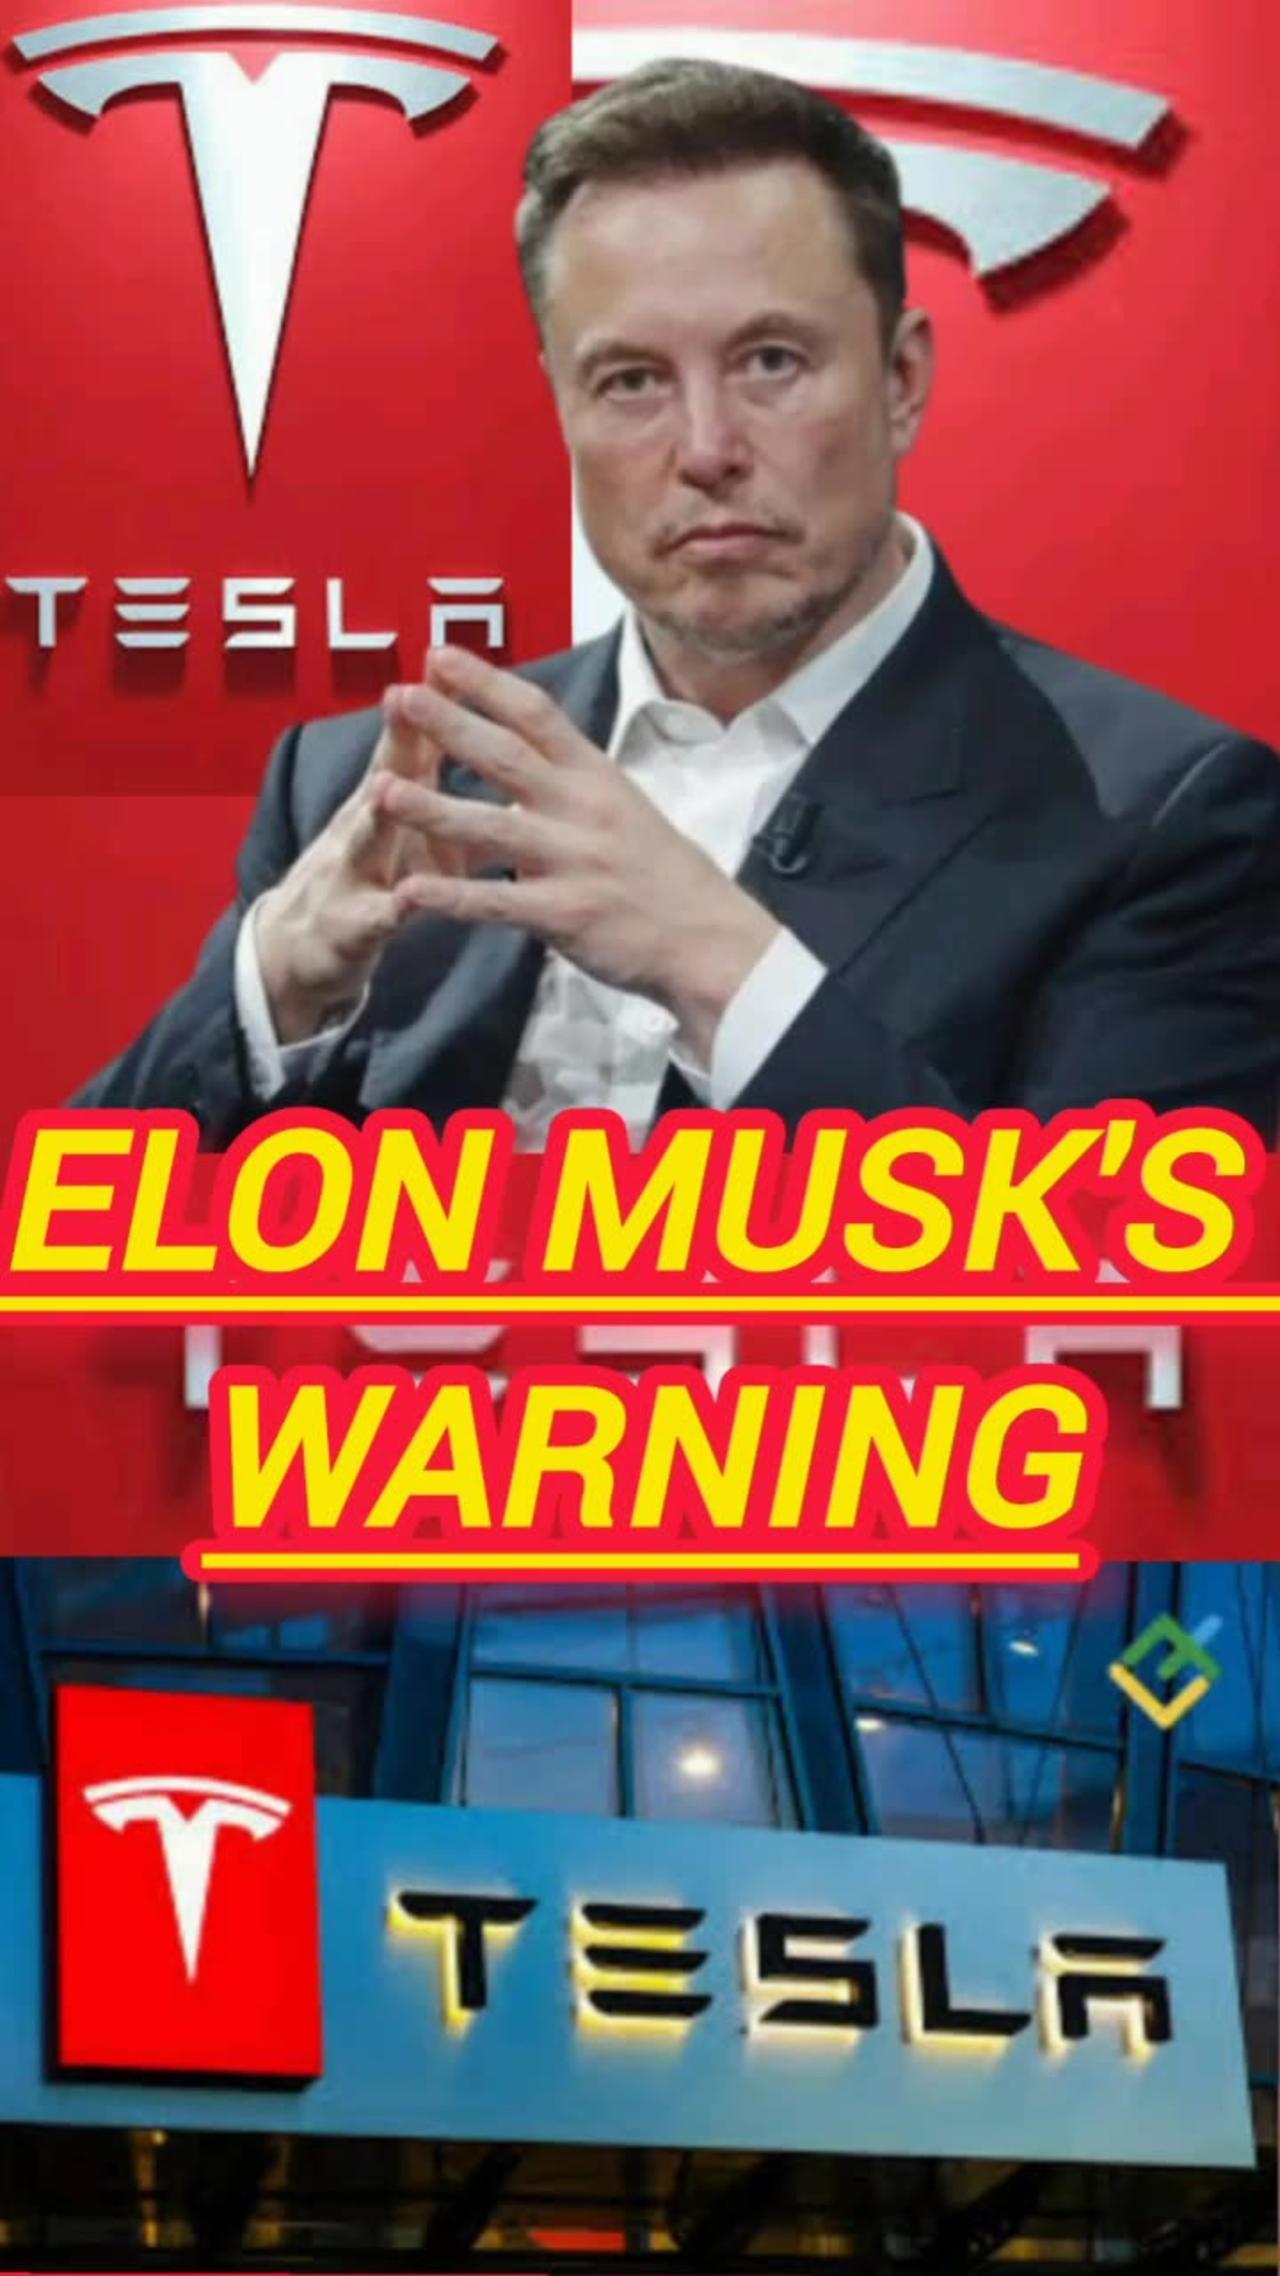 Elon Musk's Warning #elonmusk #tesla #viral #elonmusk